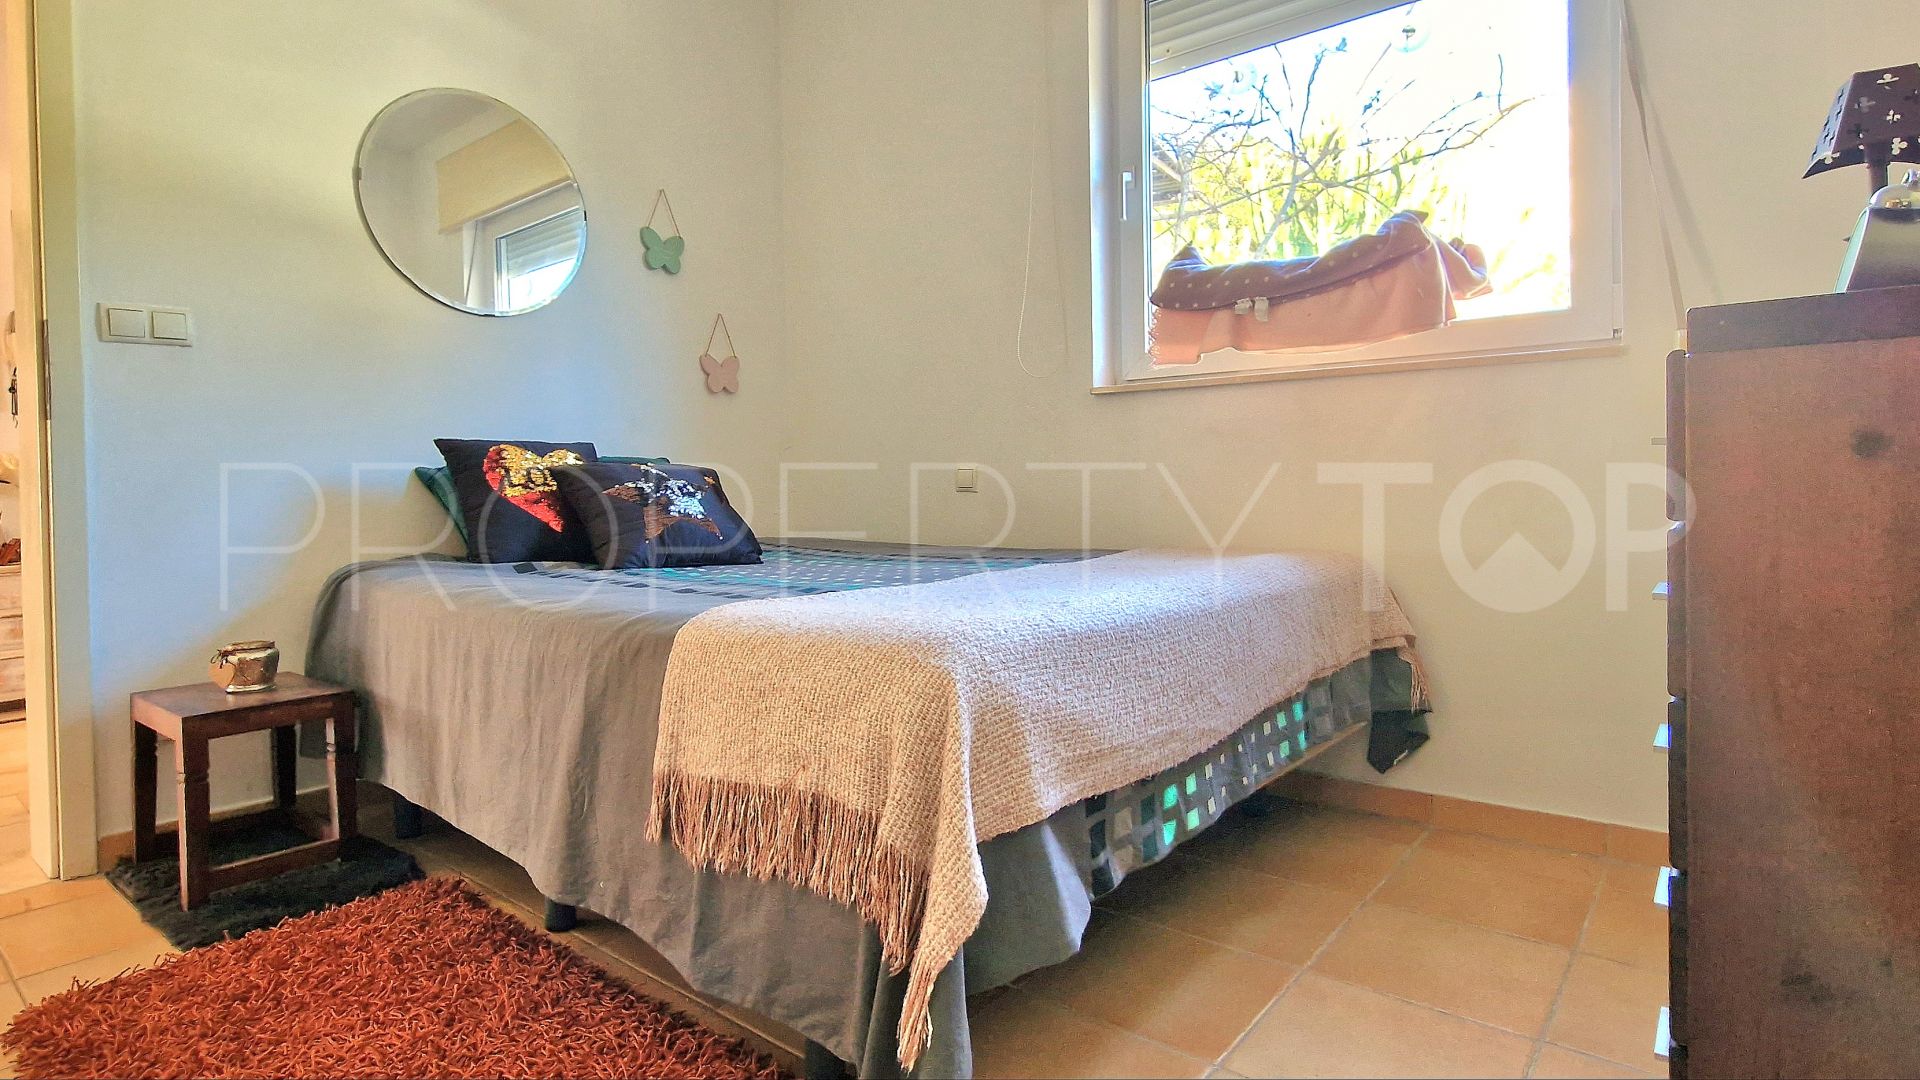 For sale villa with 4 bedrooms in Cumbre del Sol